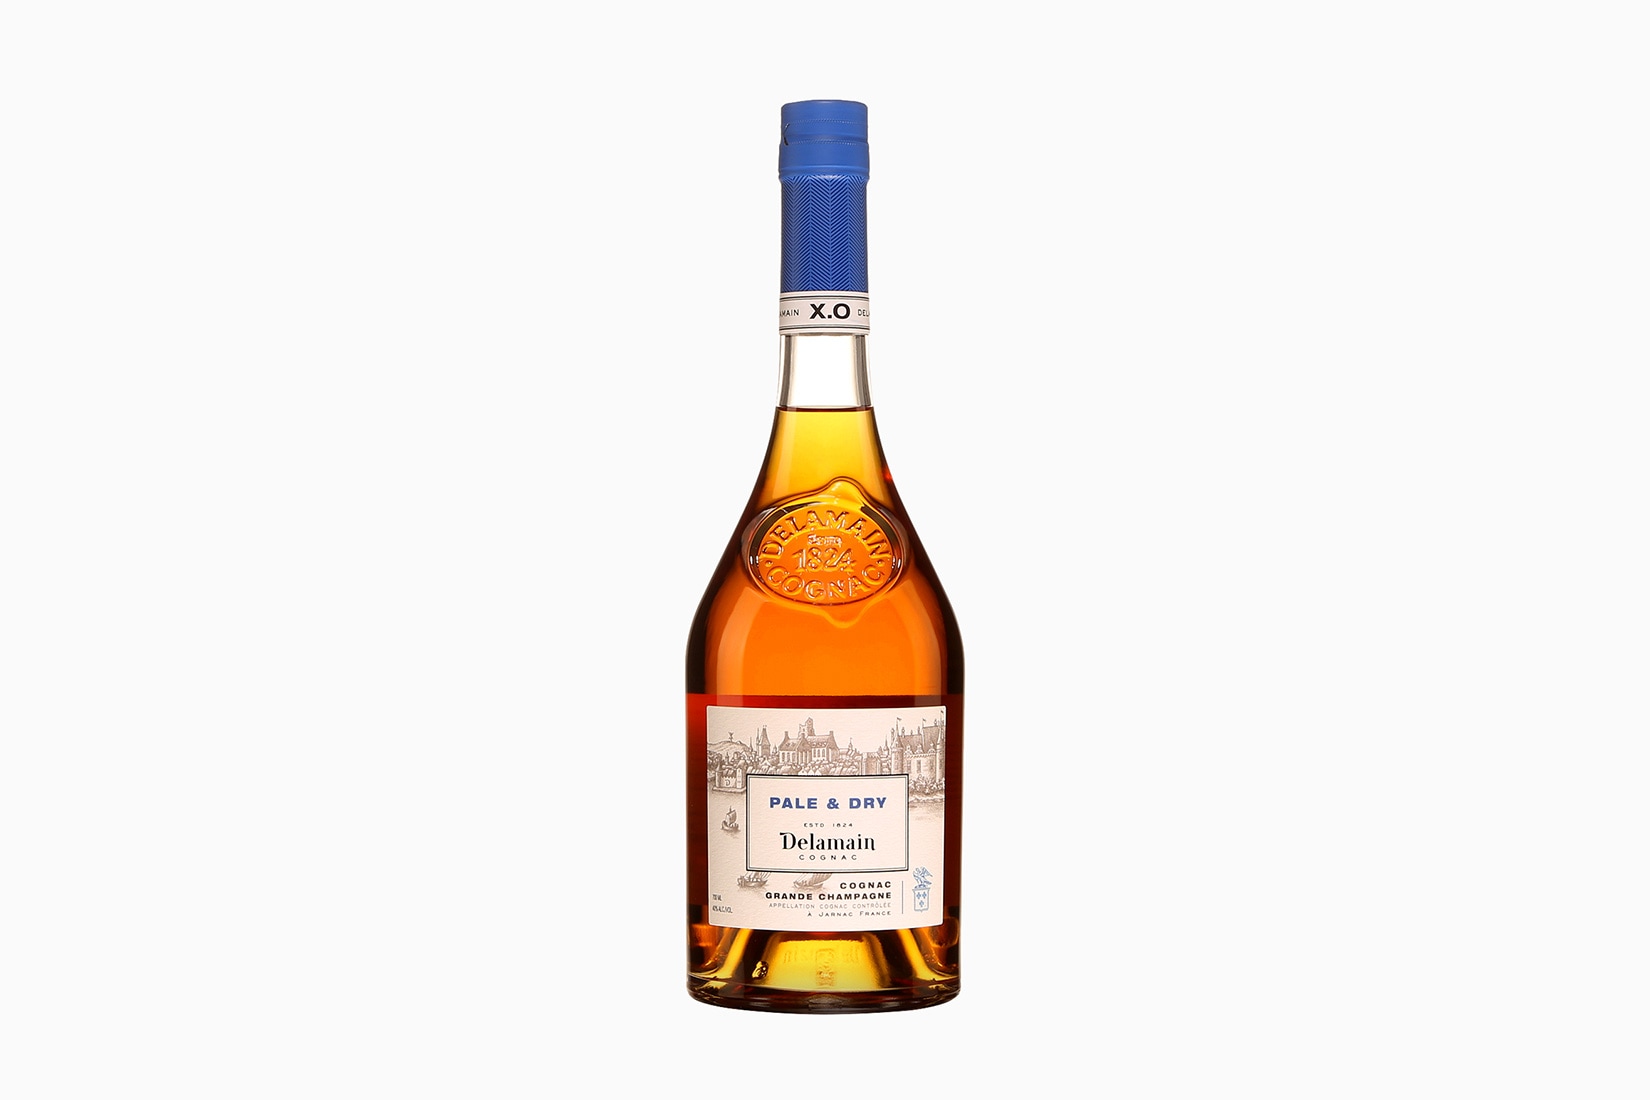 meilleures marques de cognac brandy delamain - Luxe Digital